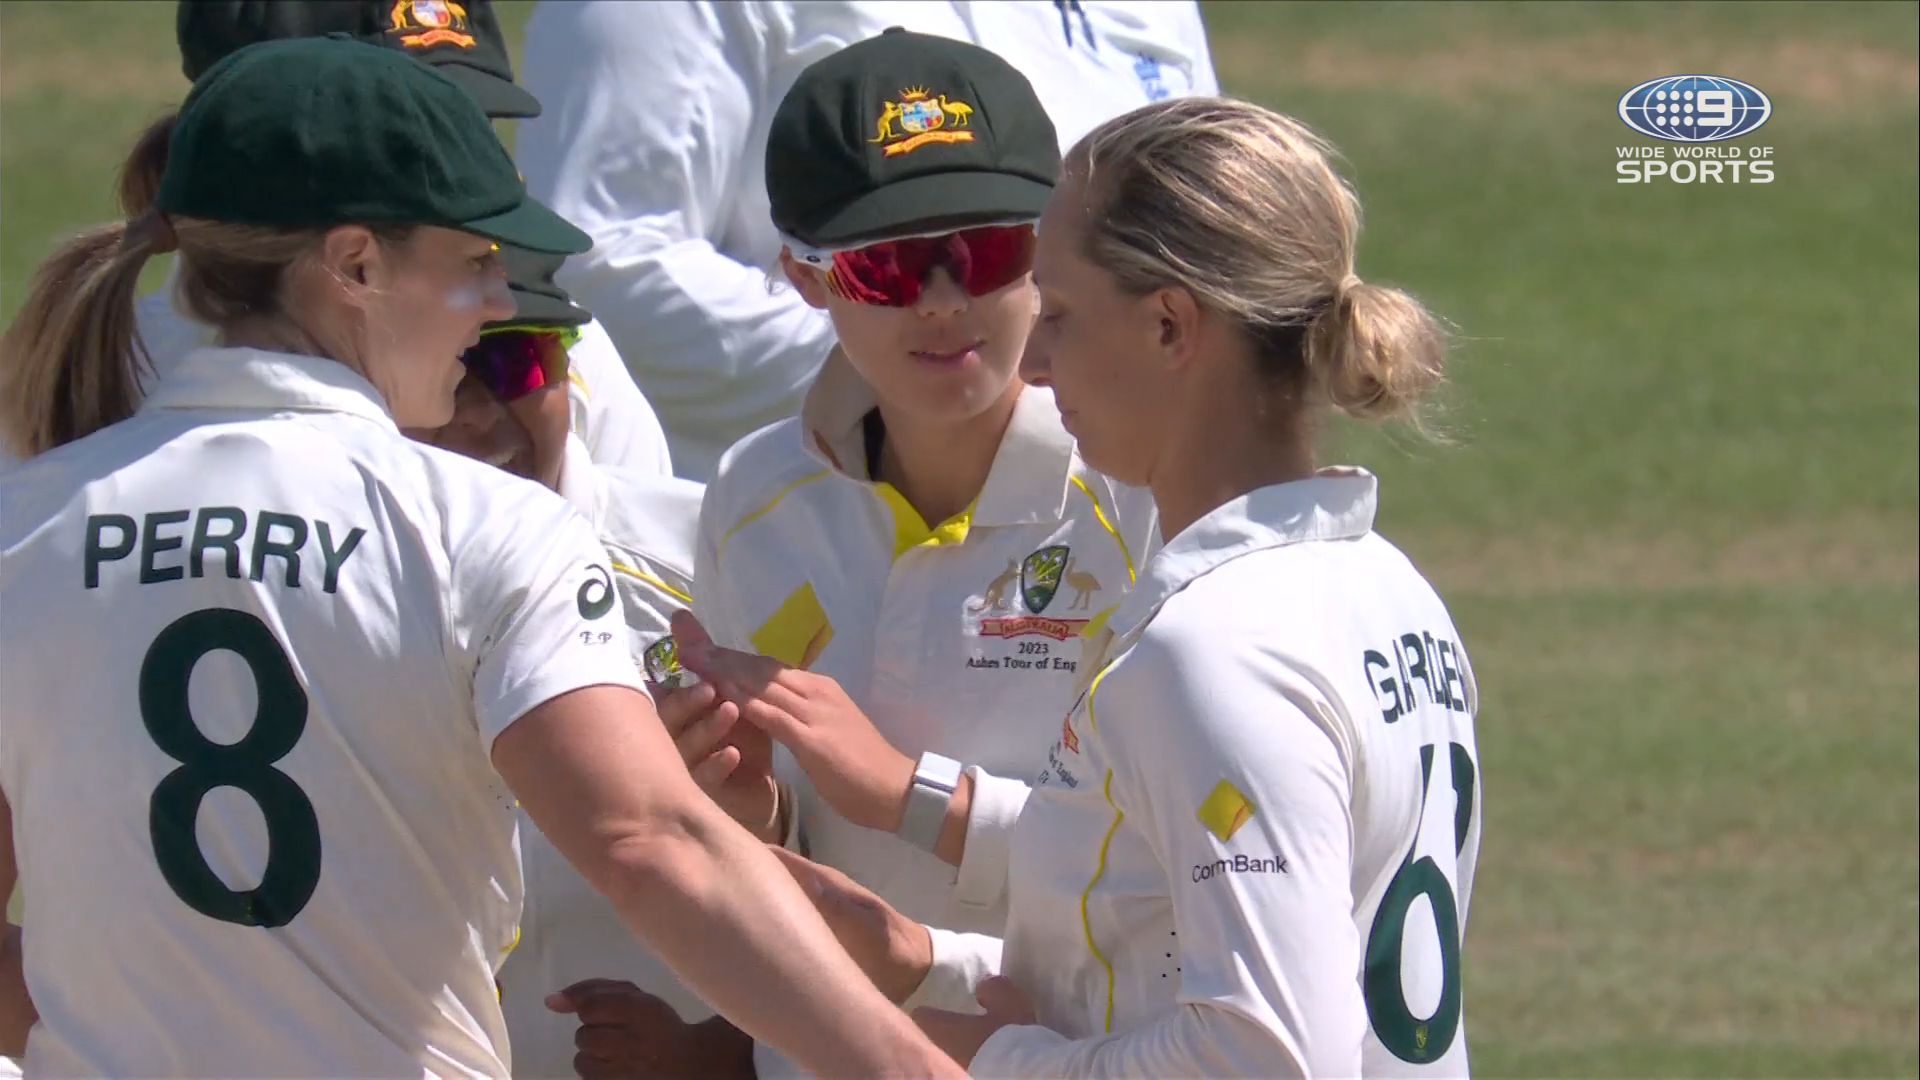 Alyssa Healy reveals she overcame broken fingers to lead Australia to historic Test win